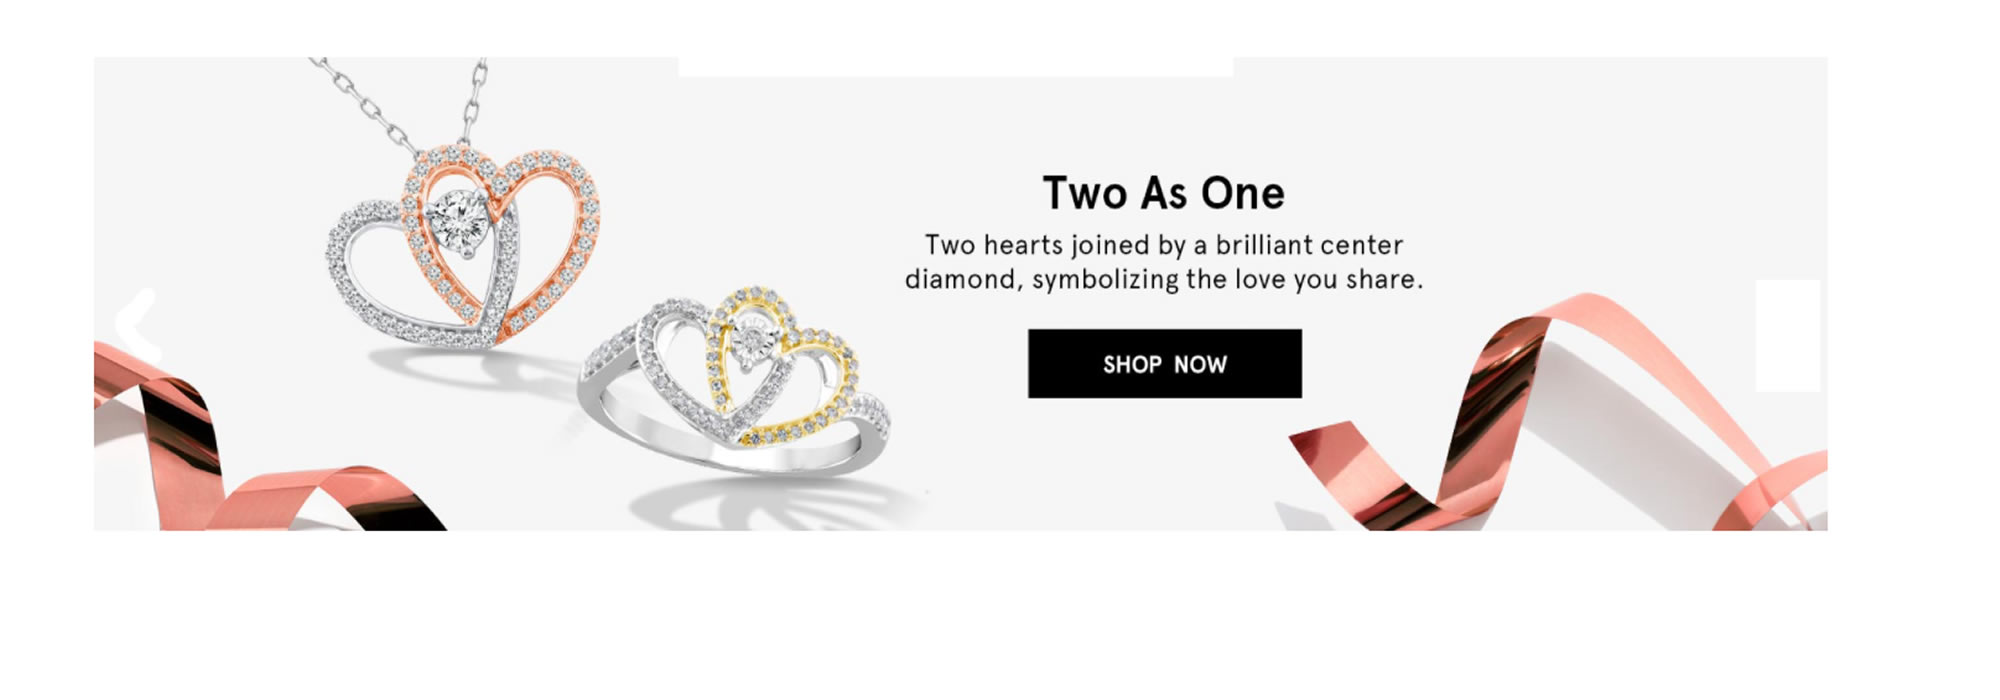 Kay Jewelers Kay Jewelers Website Clearance USA Outlet Sale 5060 OFF